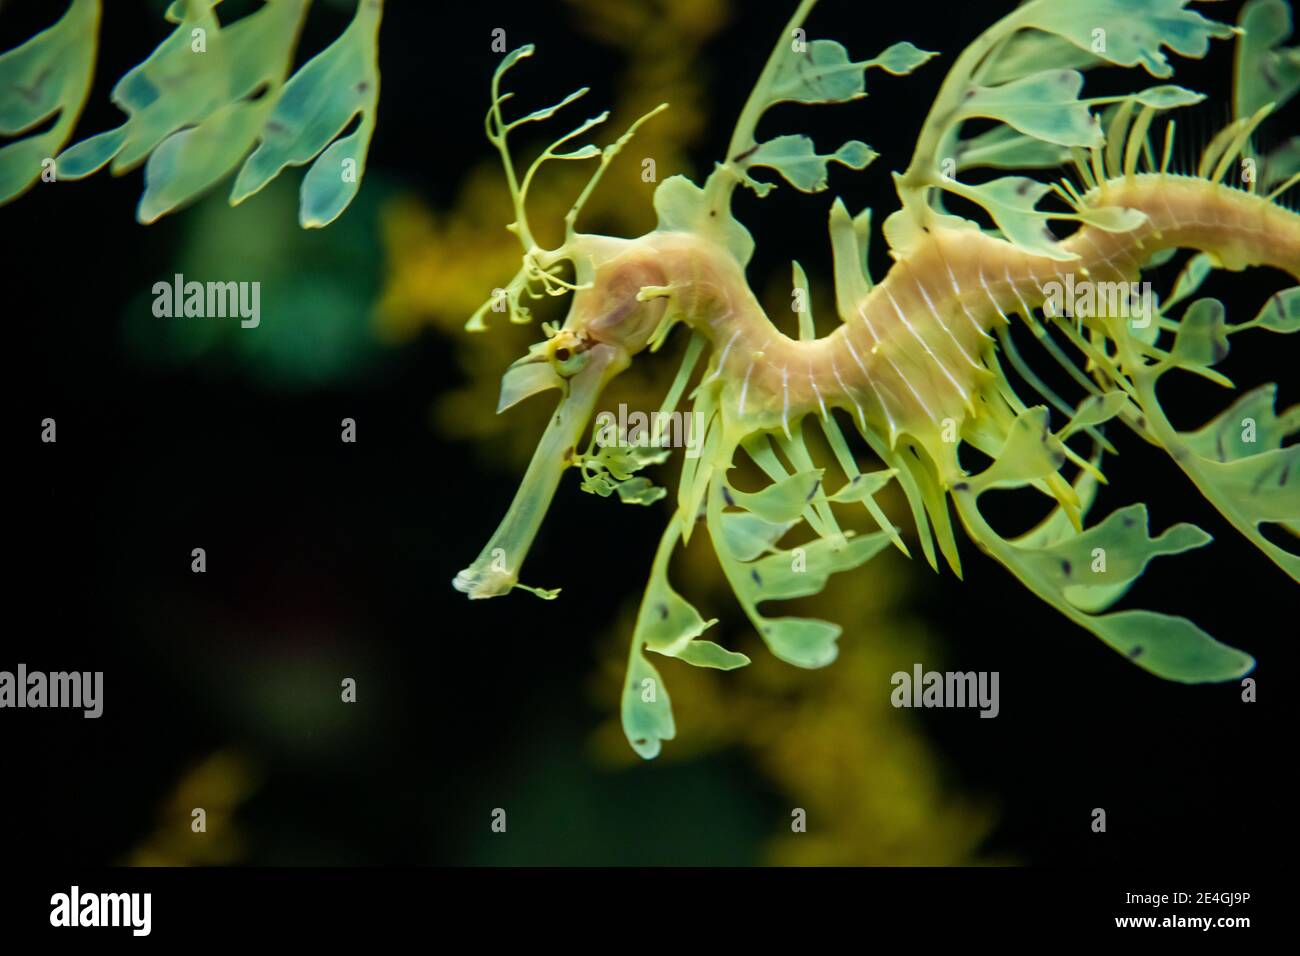 The leafy seadragon (Phycodurus eques) or Glauert's seadragon marine fish Stock Photo